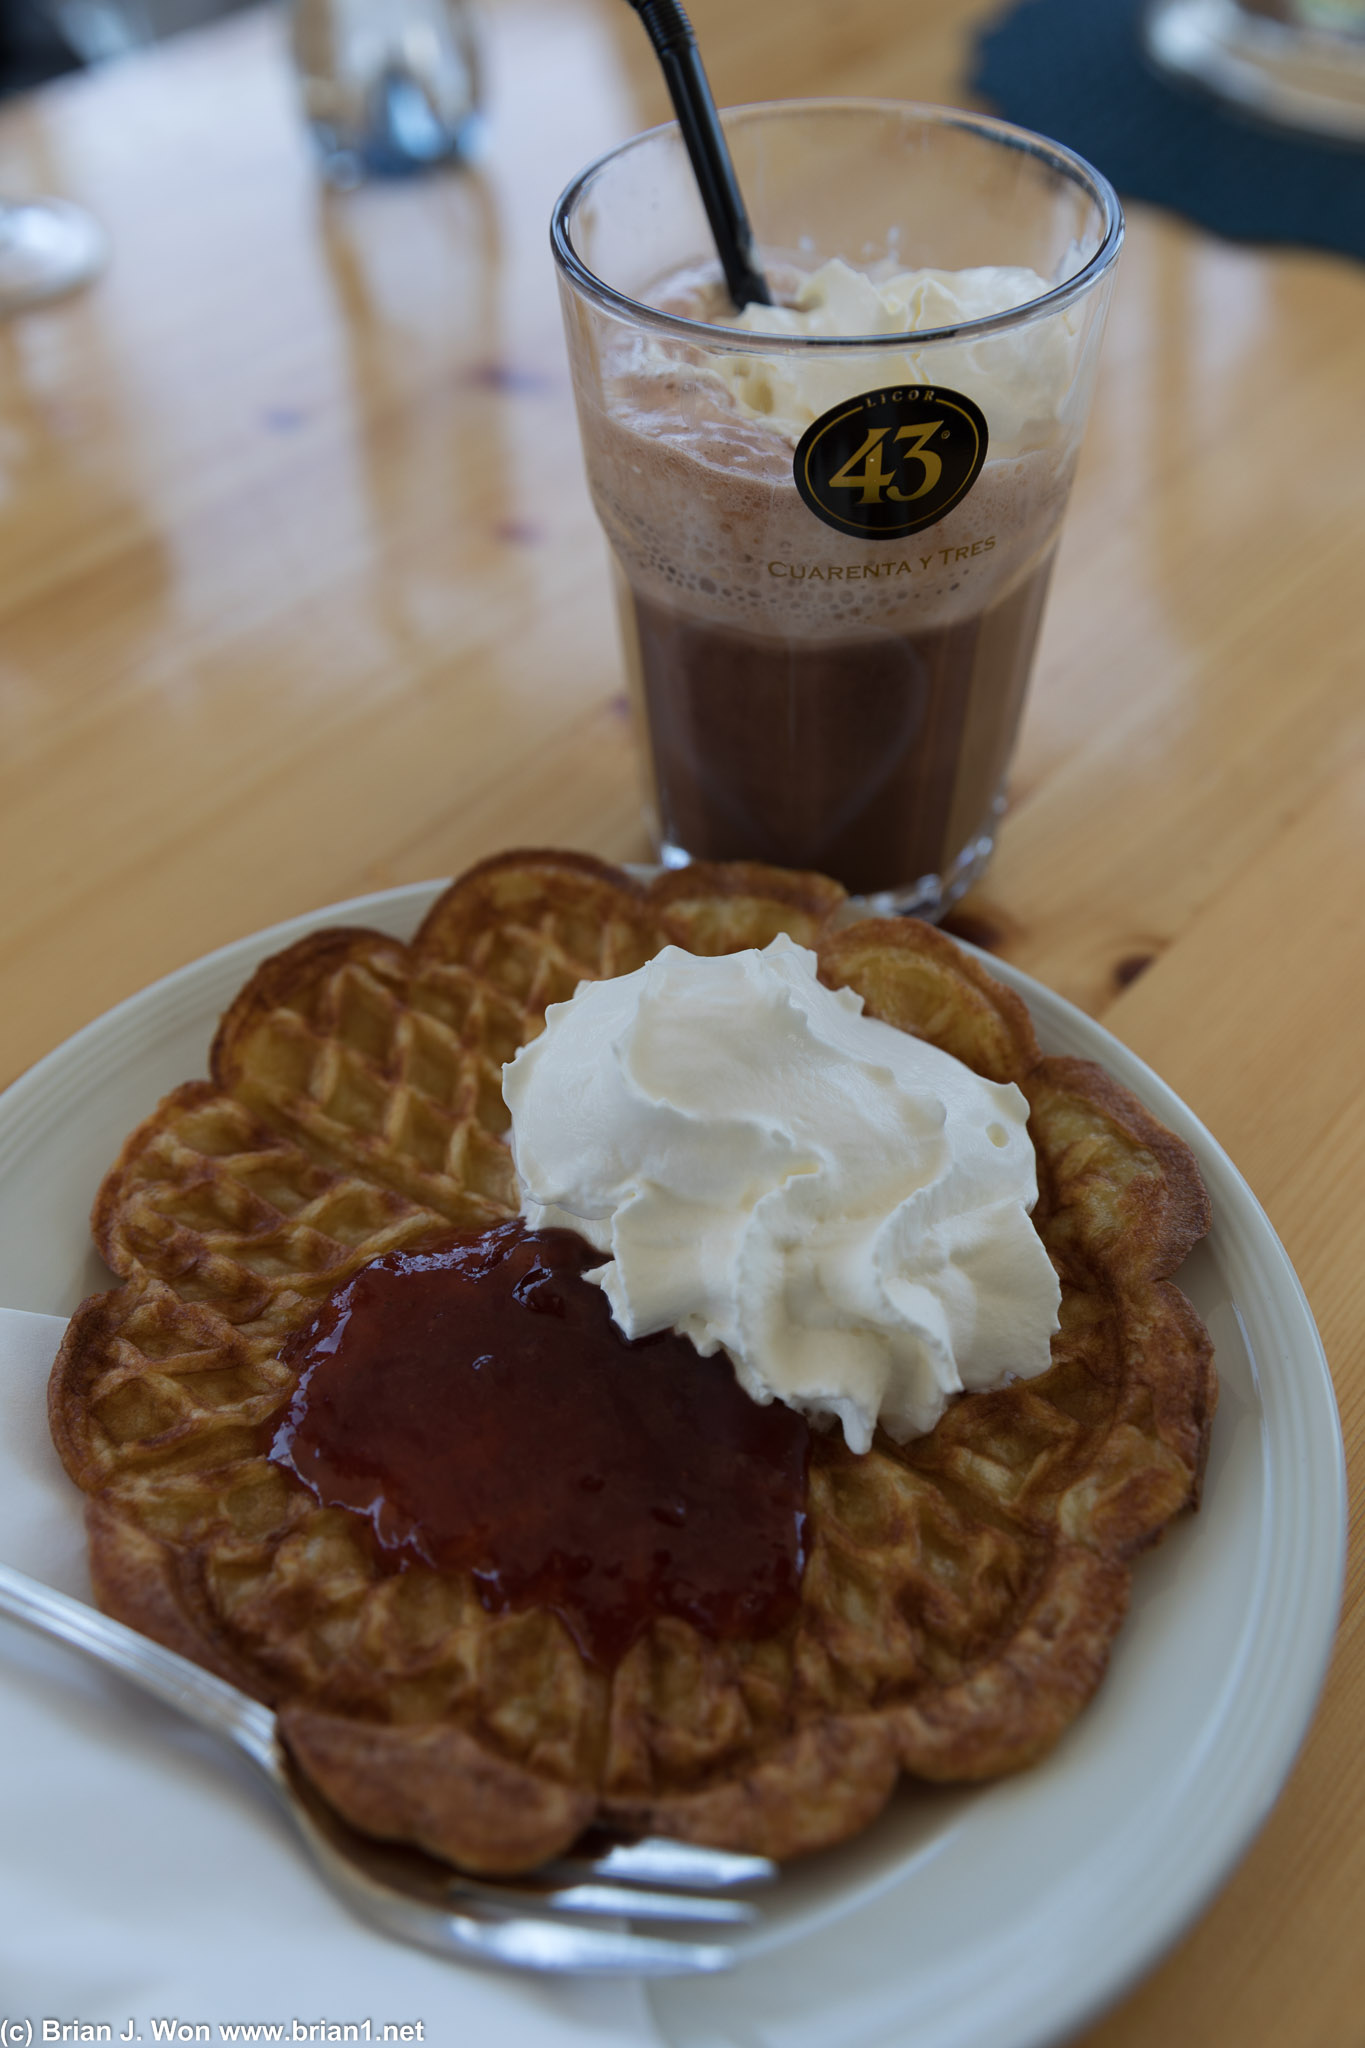 Very thin waffle and hot chocolate.